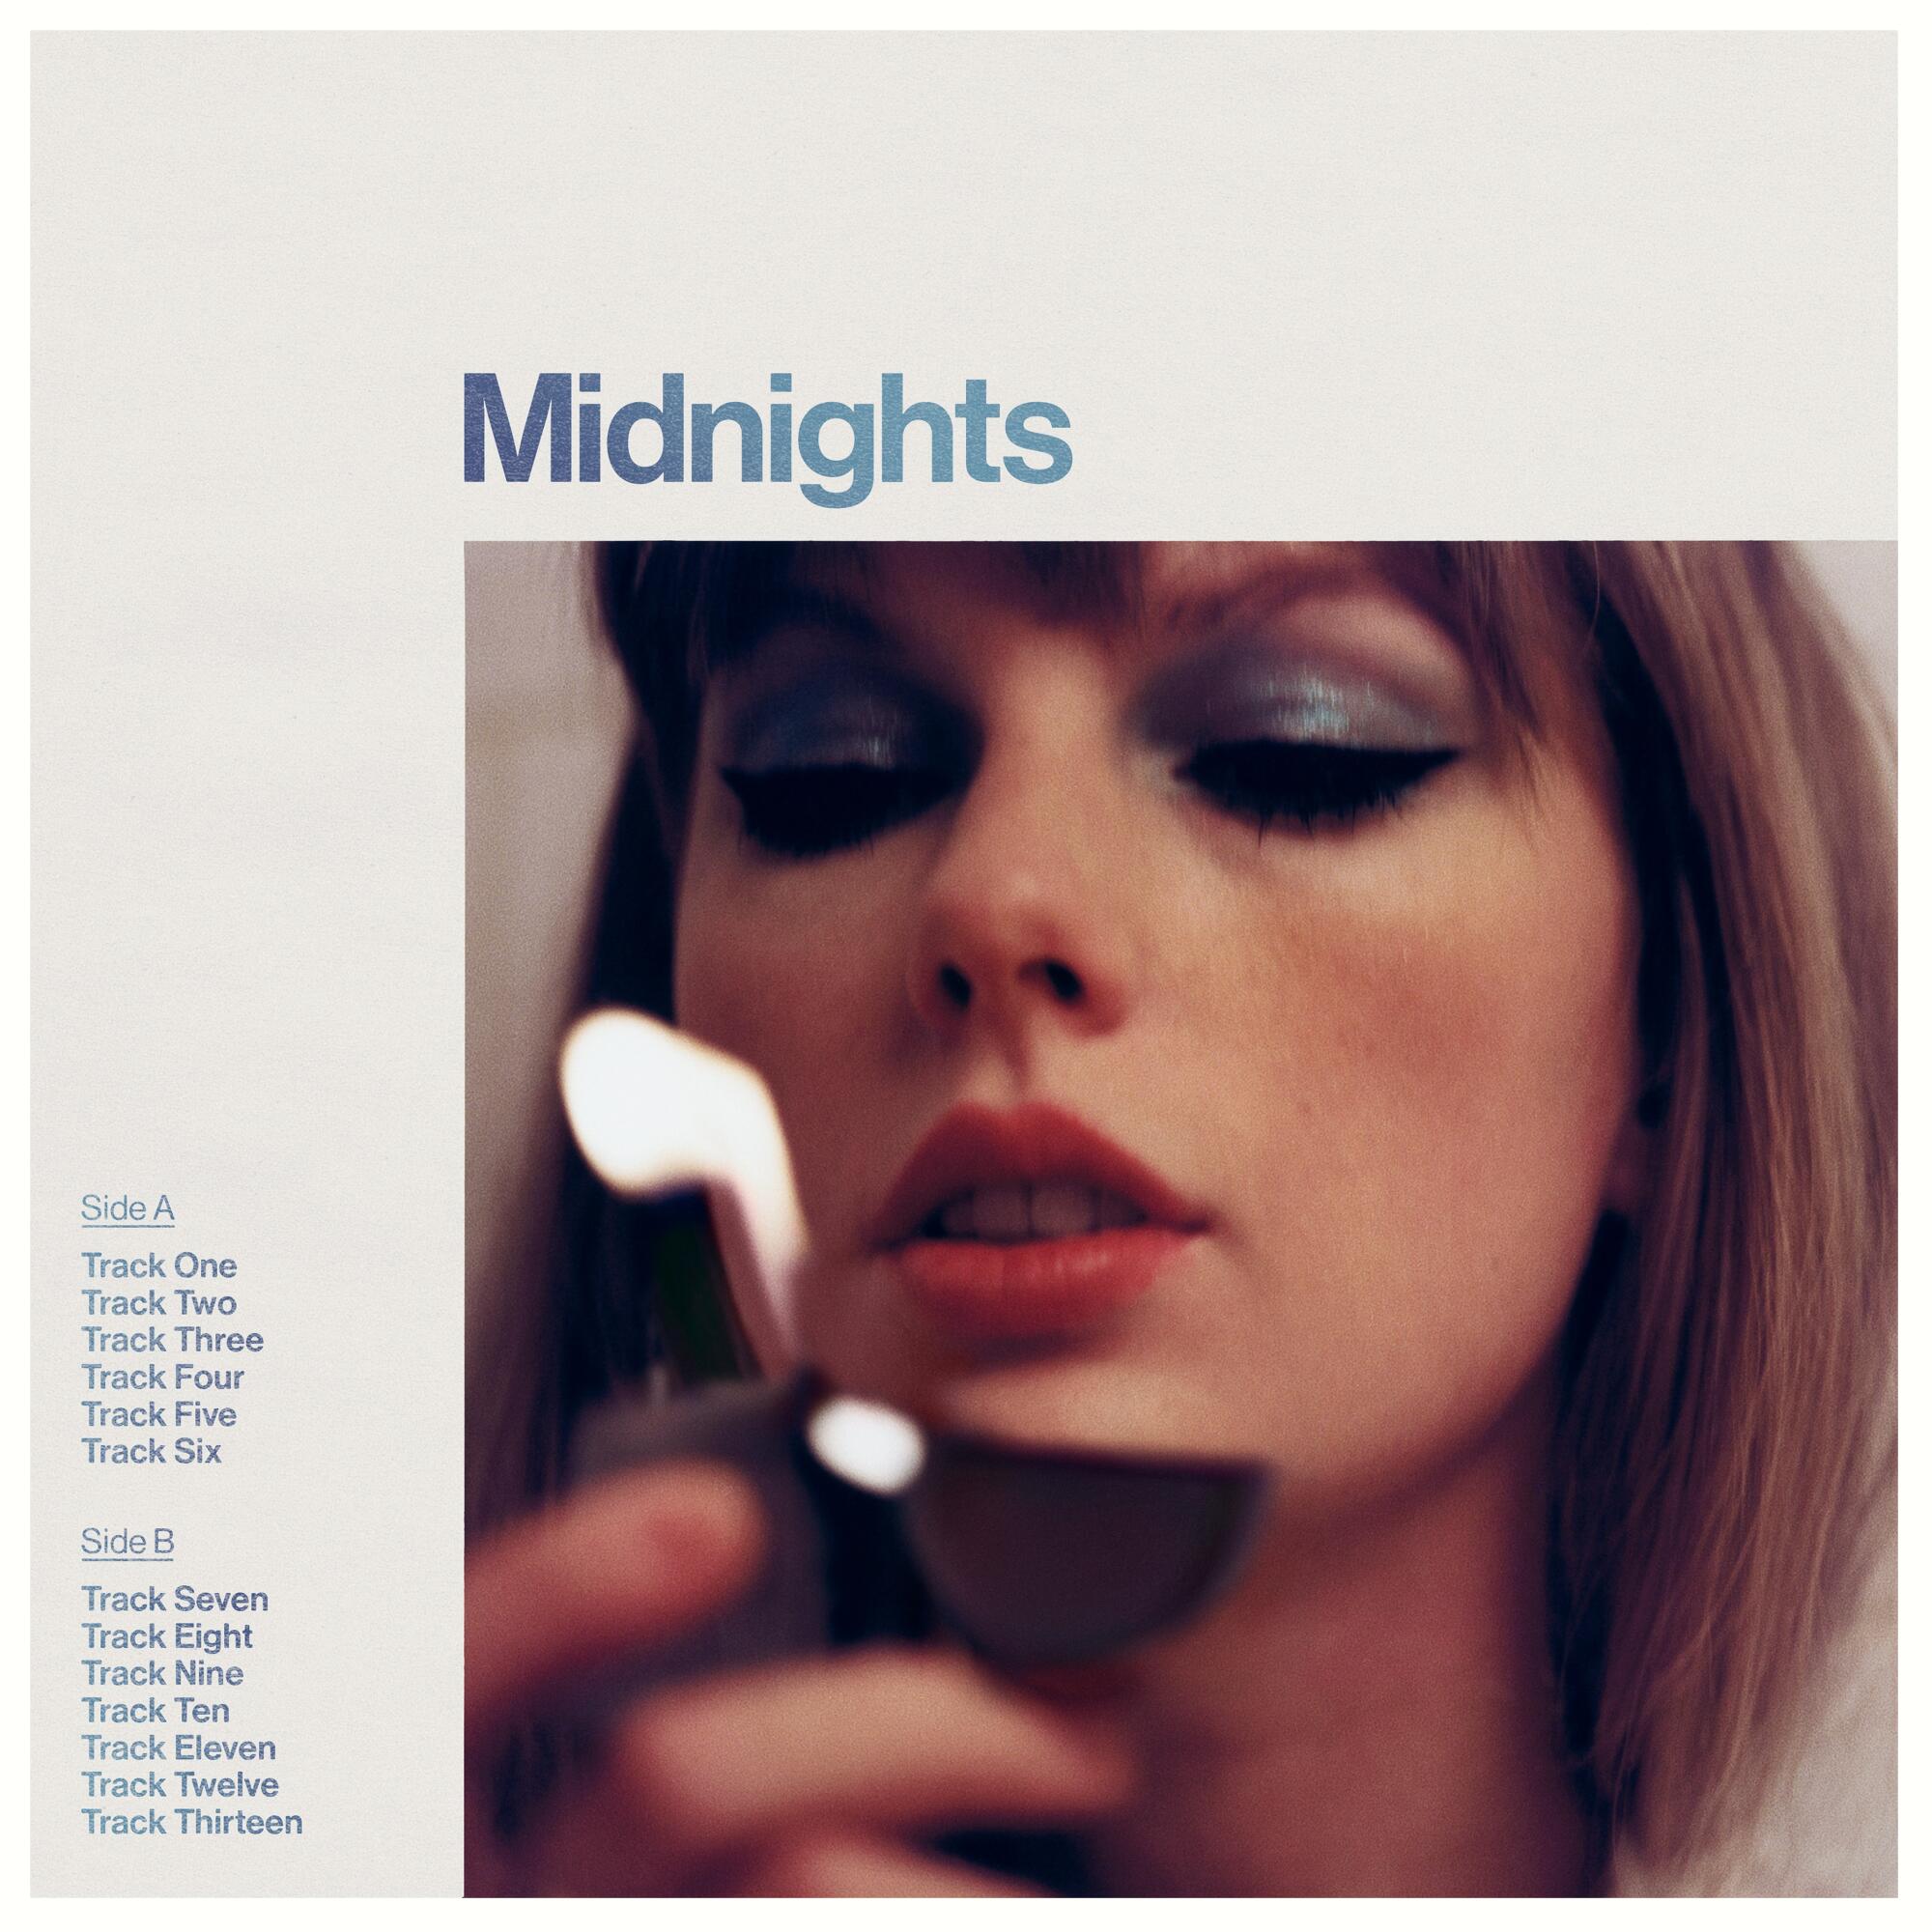 Taylor Swift's "Midnights" album 